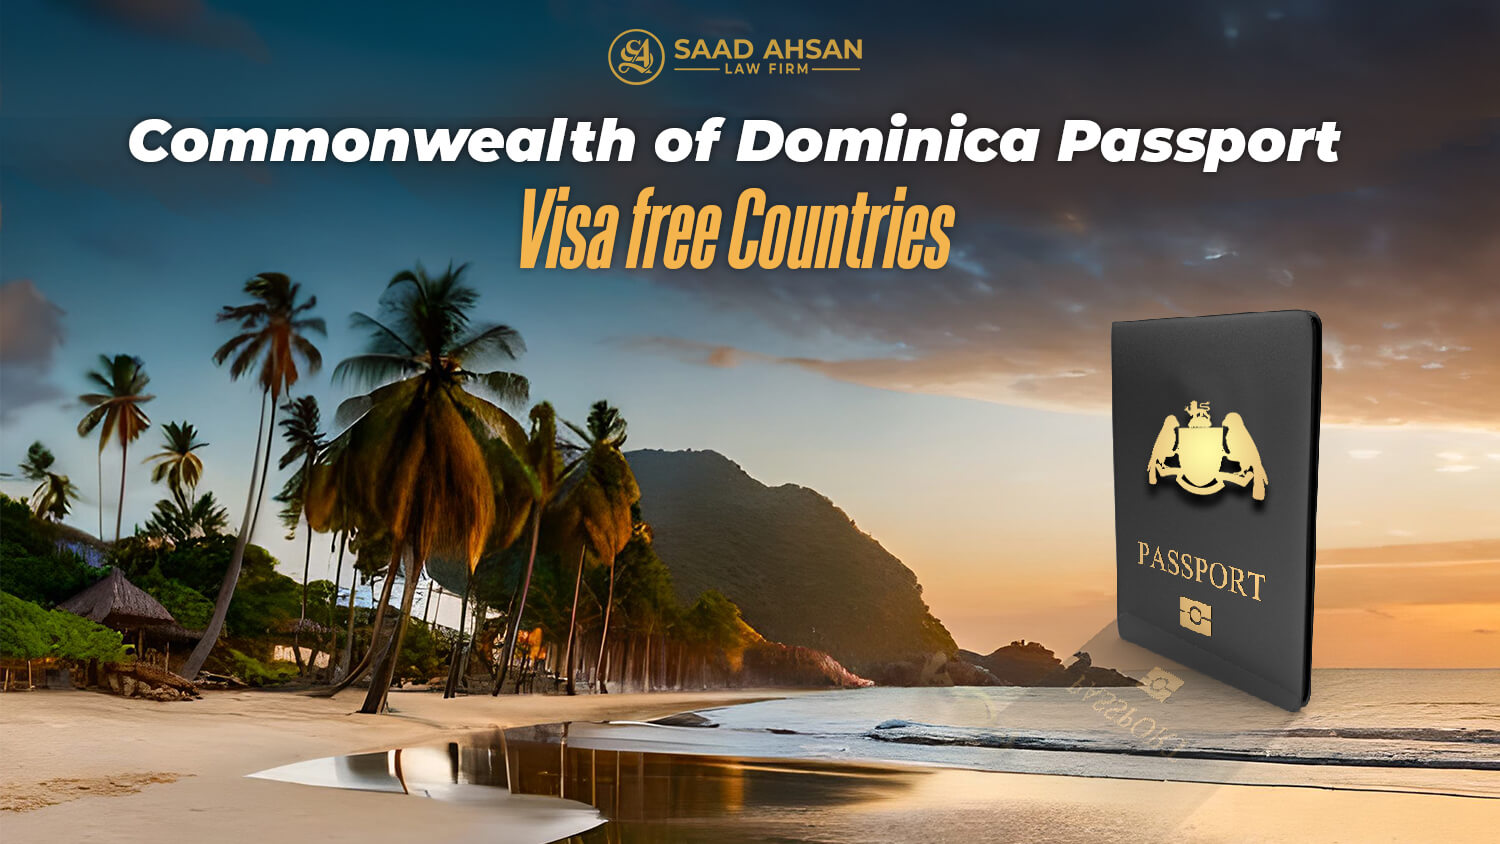 Commonwealth of Dominica Passport Visa-Free Countries